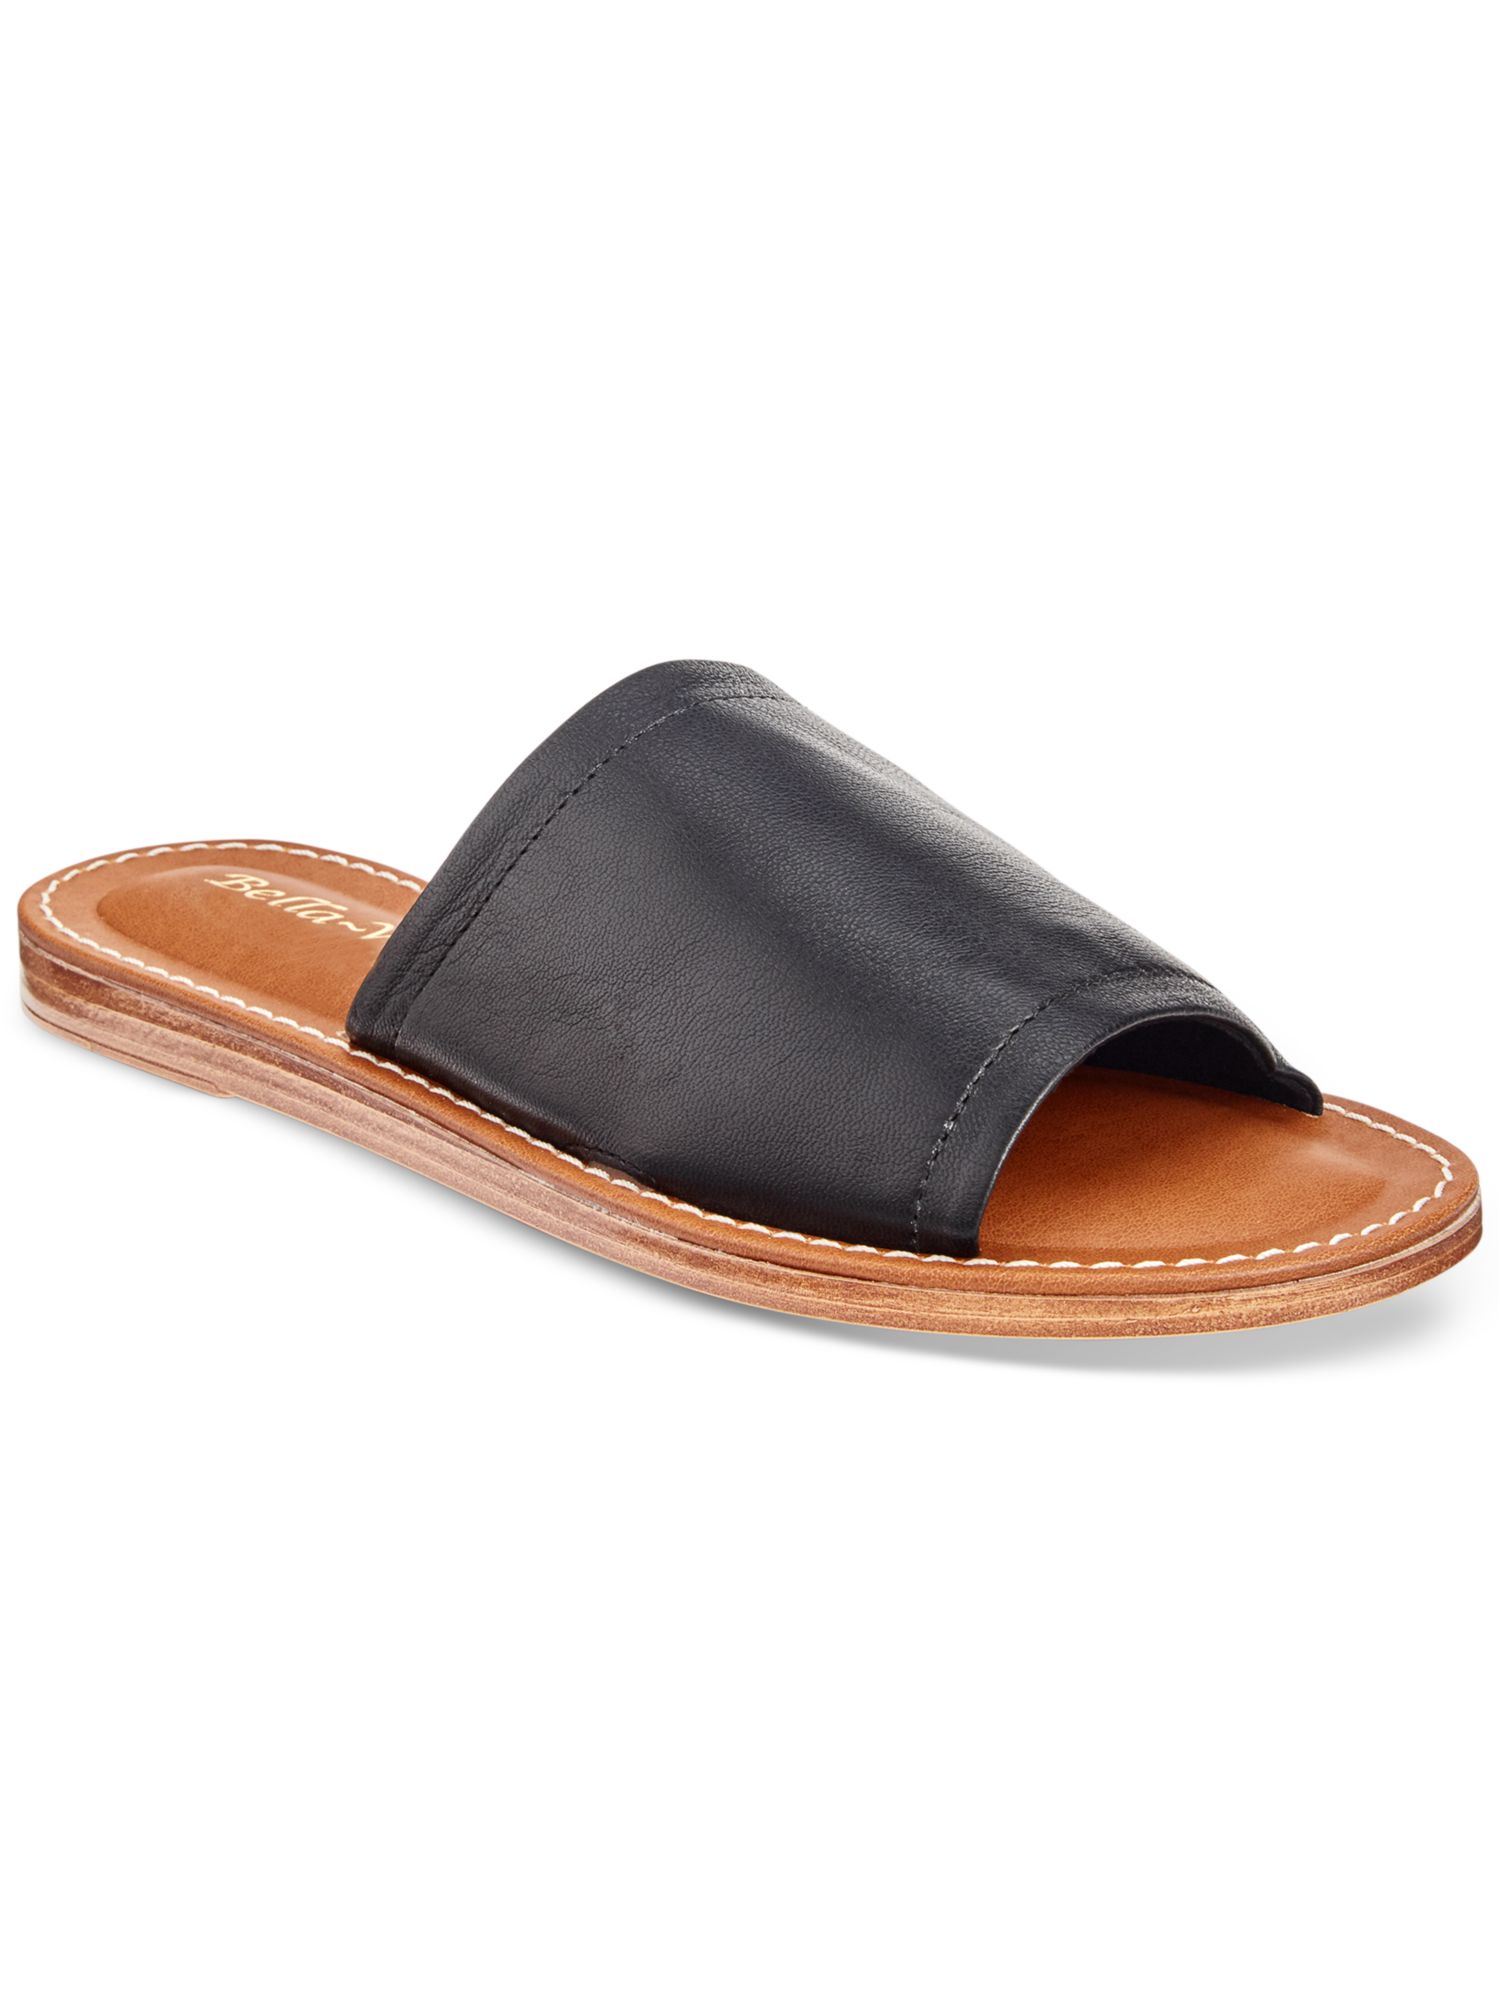 BELLA VITA Womens Black Padded Comfort Ros-italy Round Toe Slip On Leather Slide Sandals Shoes 10 M